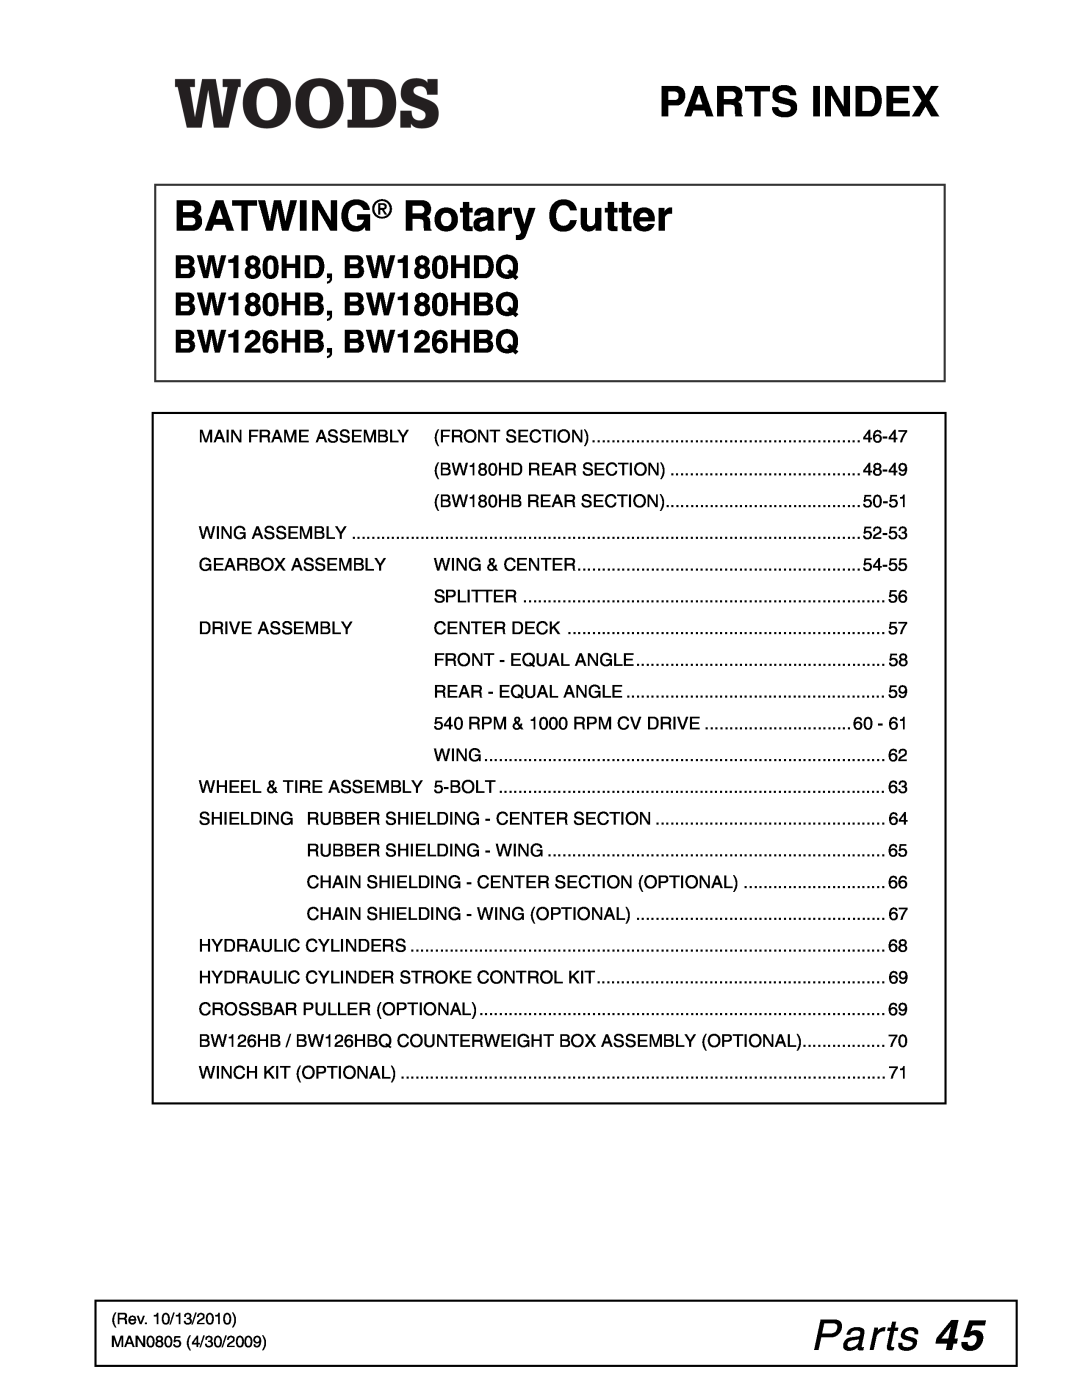 Woods Equipment manual Parts, BW180HD, BW180HDQ BW180HB, BW180HBQ, BW126HB, BW126HBQ, PARTS INDEX BATWING Rotary Cutter 